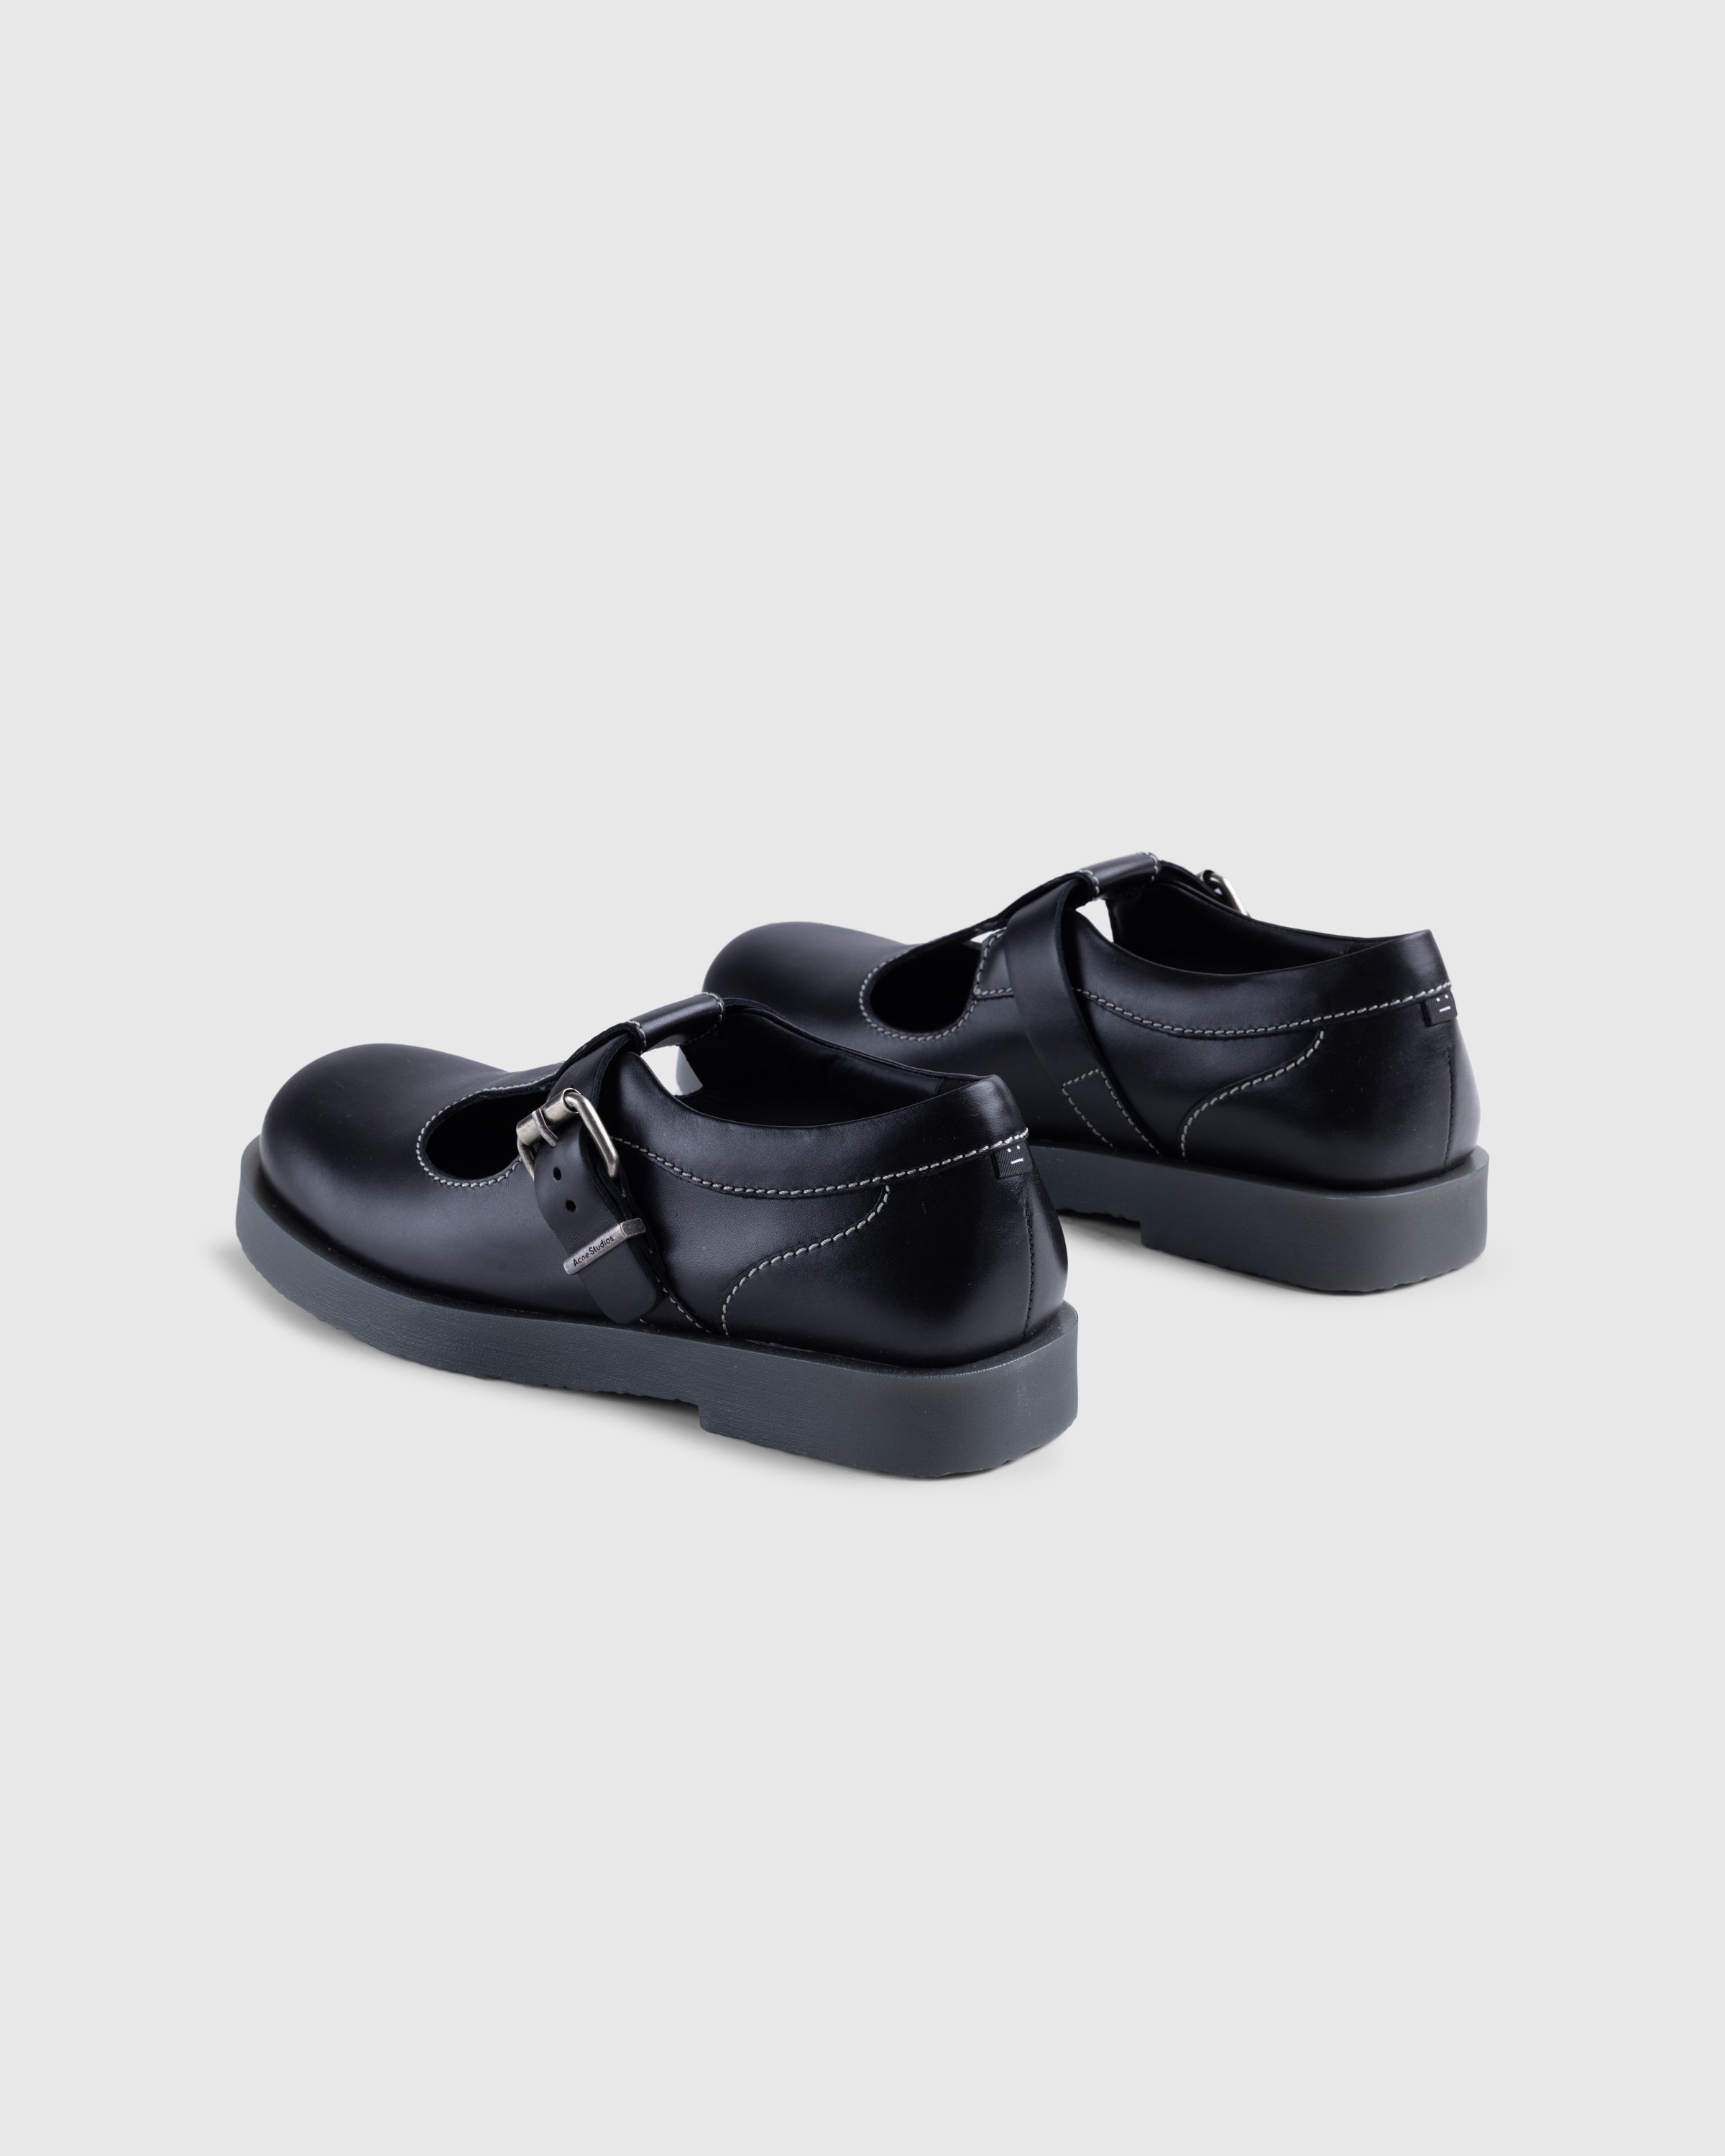 Acne Studios – Berylab Leather Buckle Shoes Black - Shoes - Black - Image 4